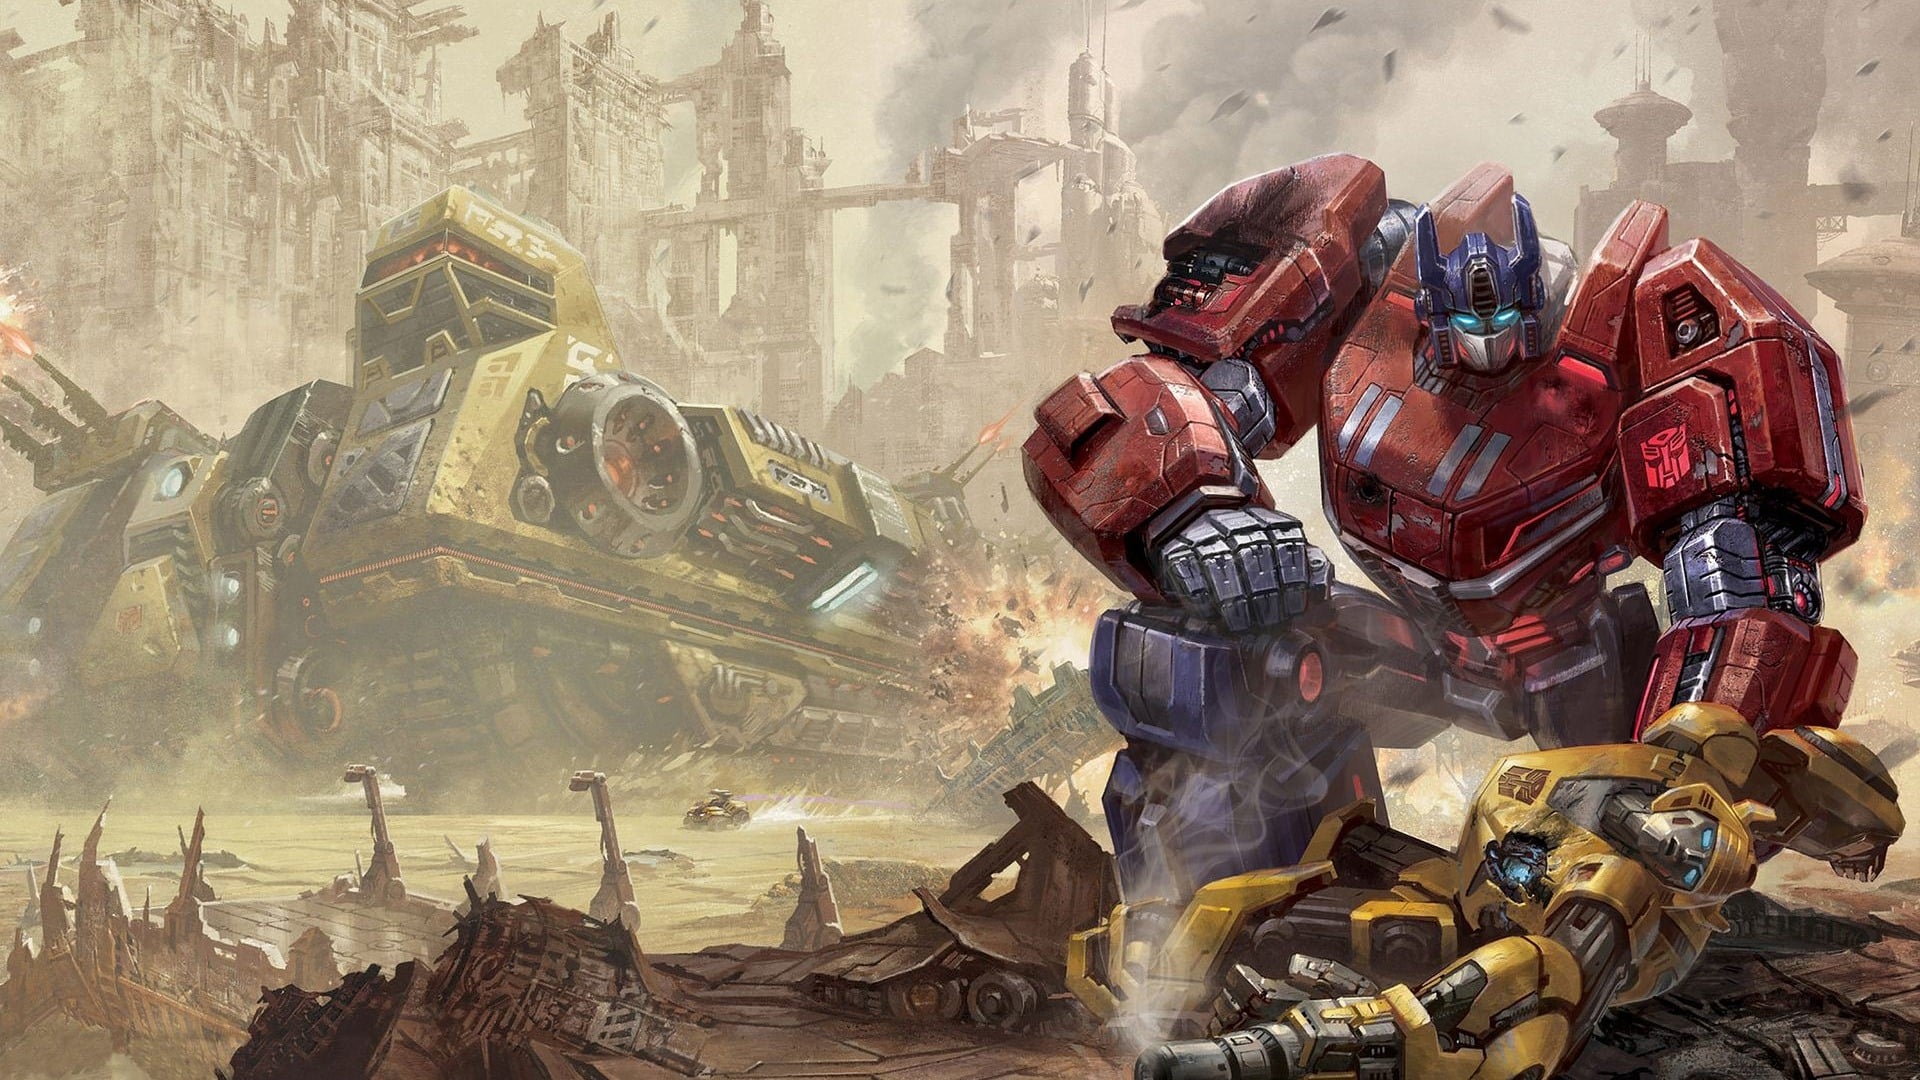 Transformers Fall of Cybertron Optimus Prime & Bumblebee Wallpaper